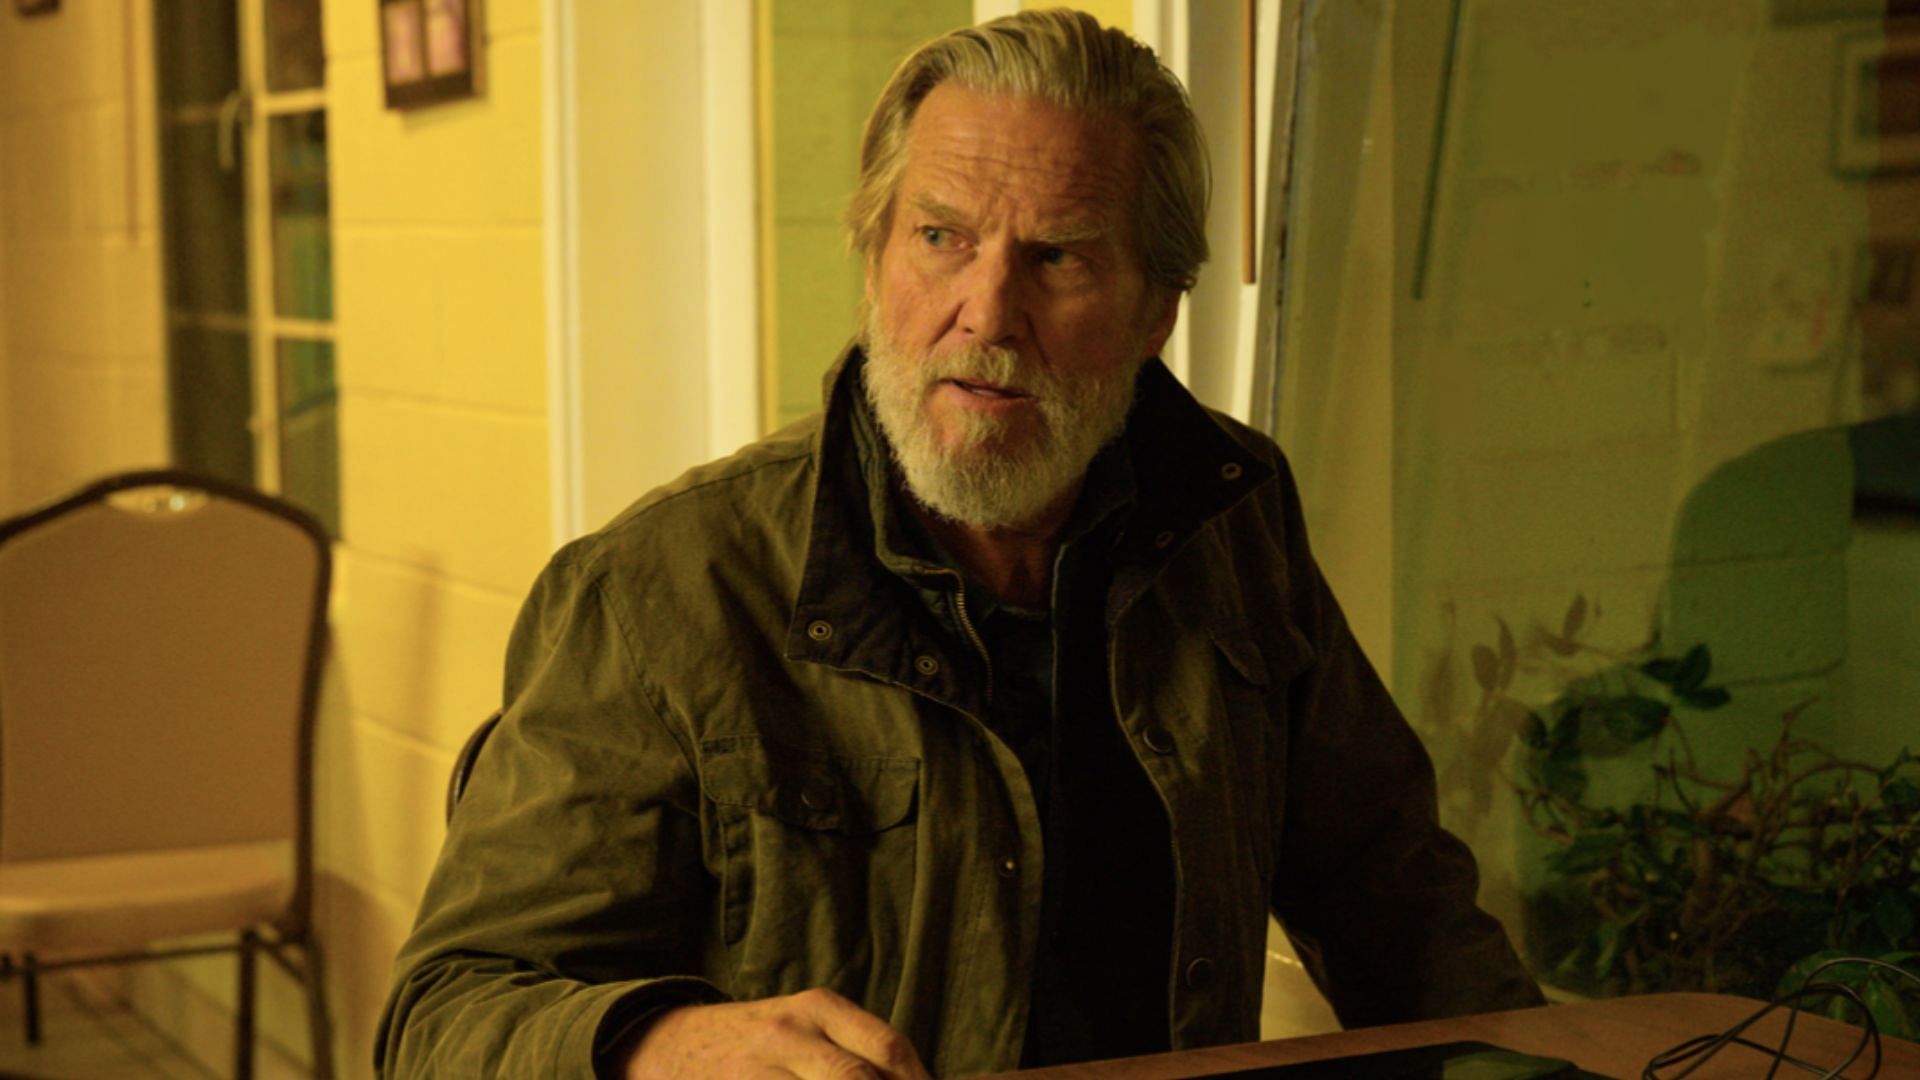 Jeff Bridges in The Old Man (Image via IMDb)